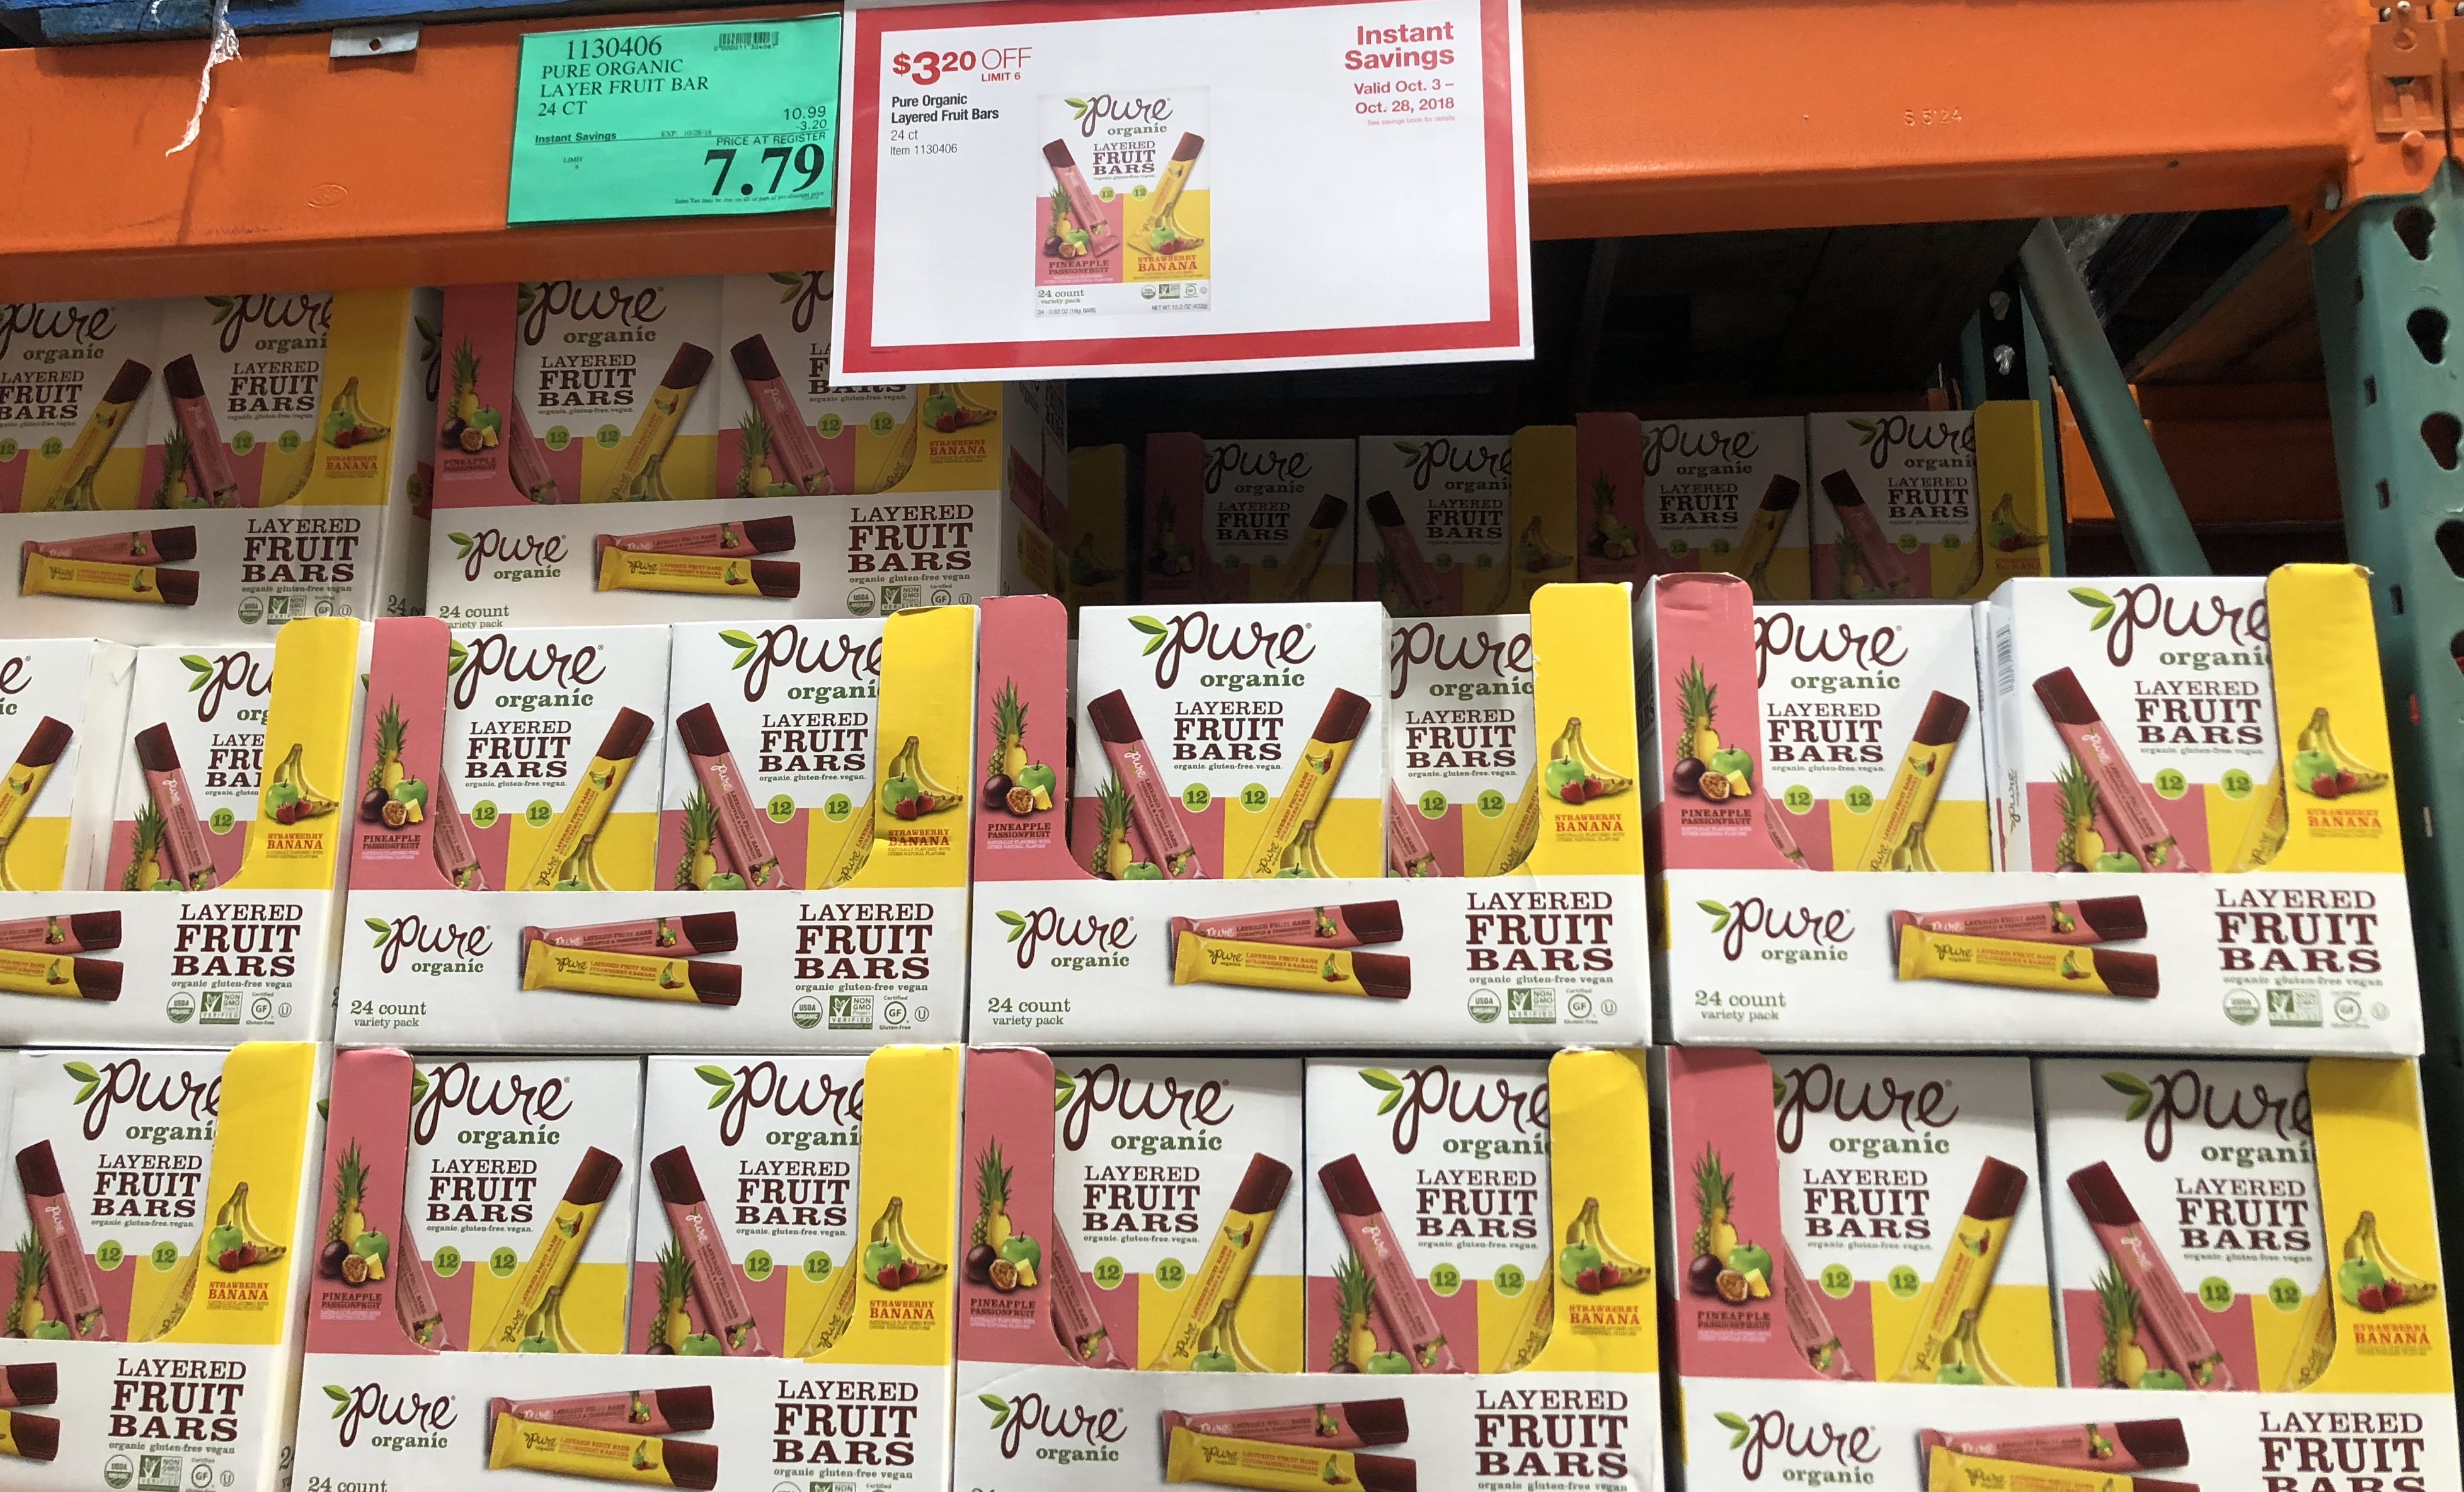 Costco deals October 2018 – Pure organic layered fruit bars at Costco